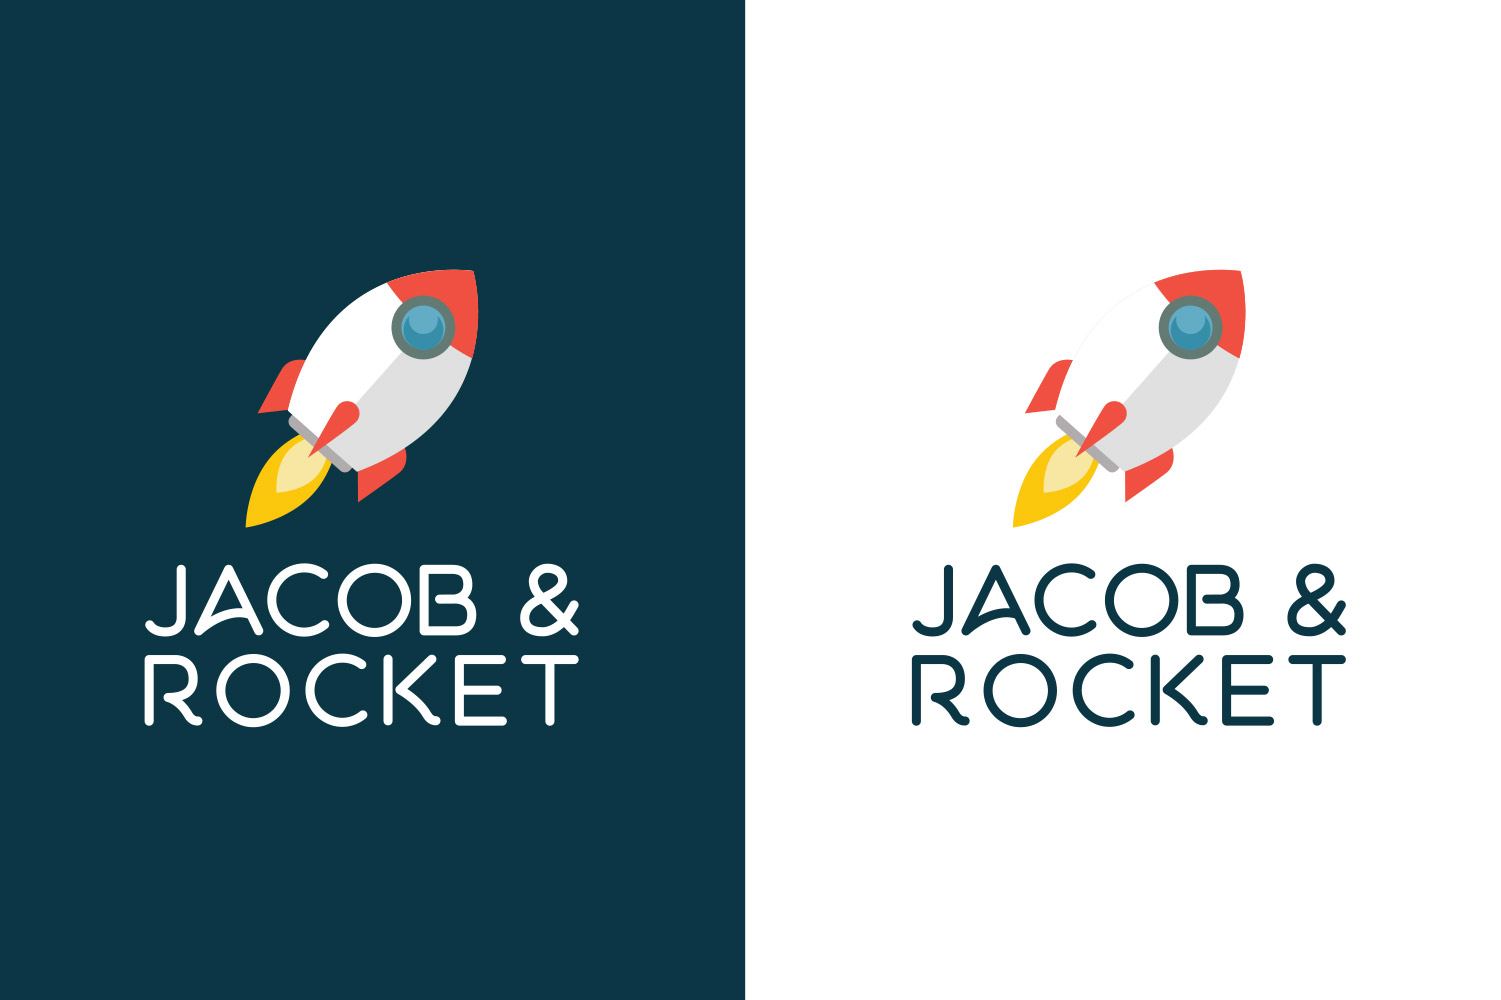 Jacob Rocket, logo design image